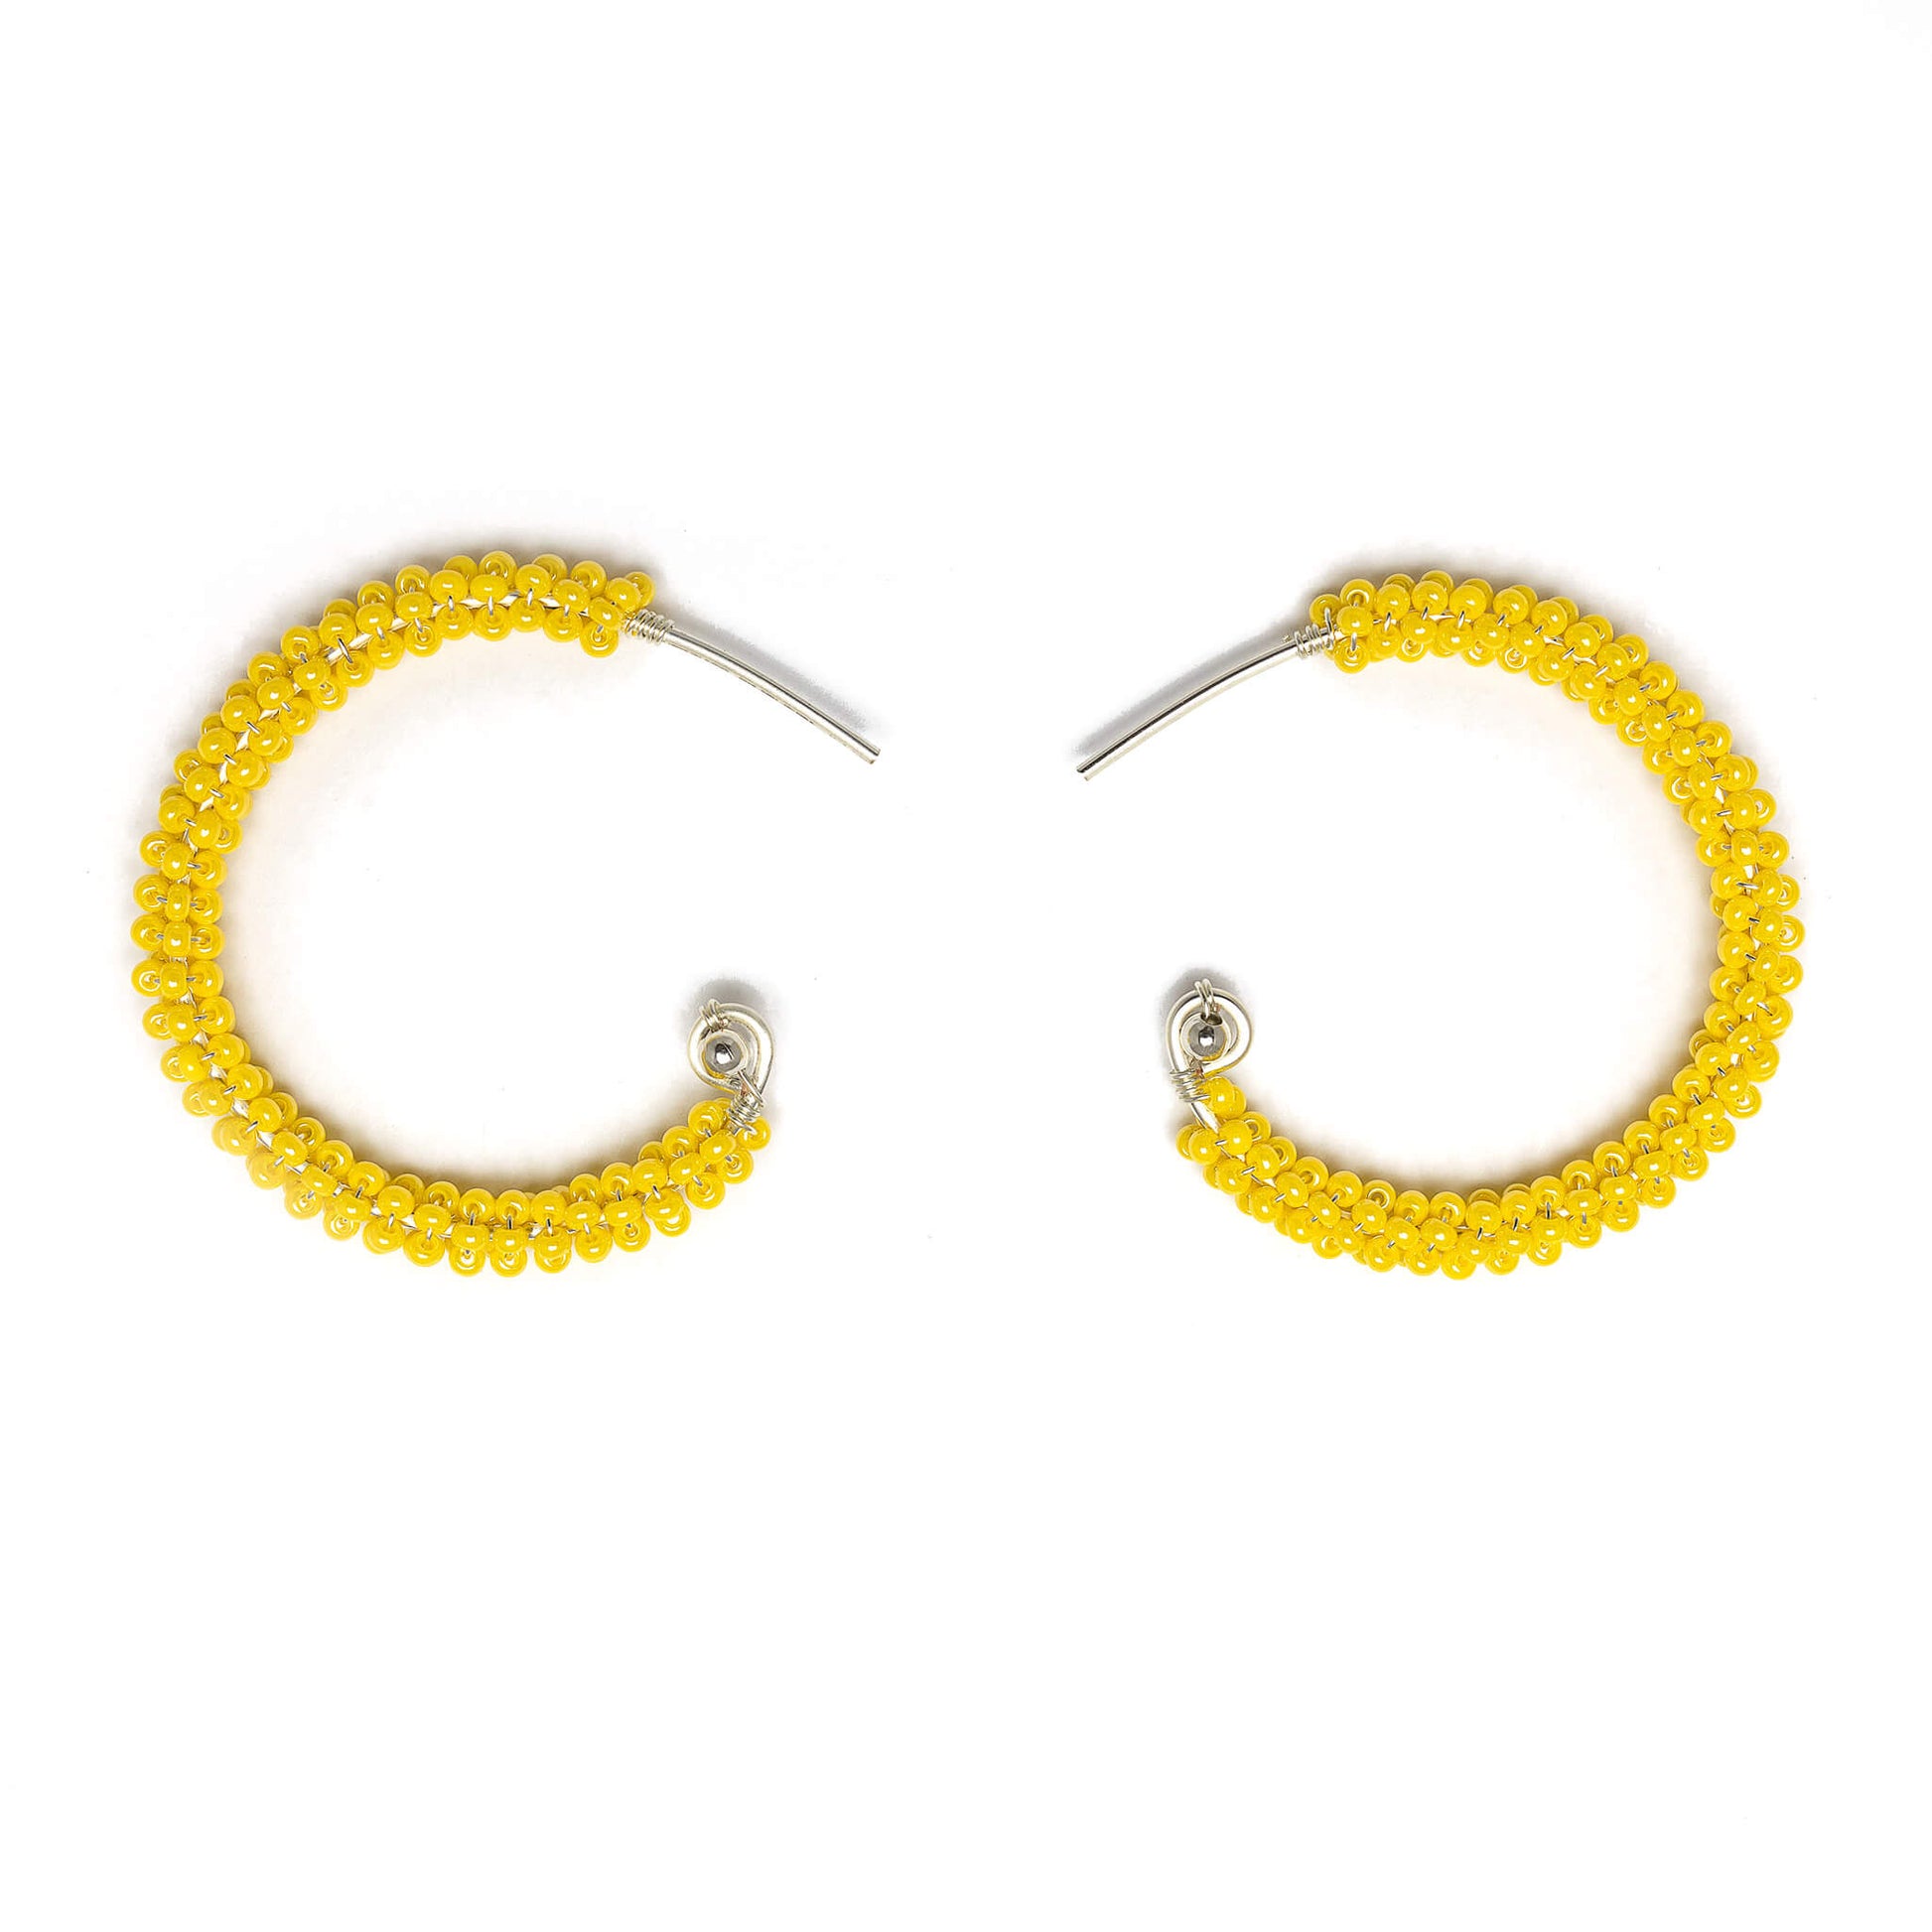 Florence Silver Hoop Earrings are 1.5 inches long, Silver and Yellow Earrings. Wire Wrapped Earrings. Lightweight and comfortable earrings. Handmade for women. Open hoop earrings